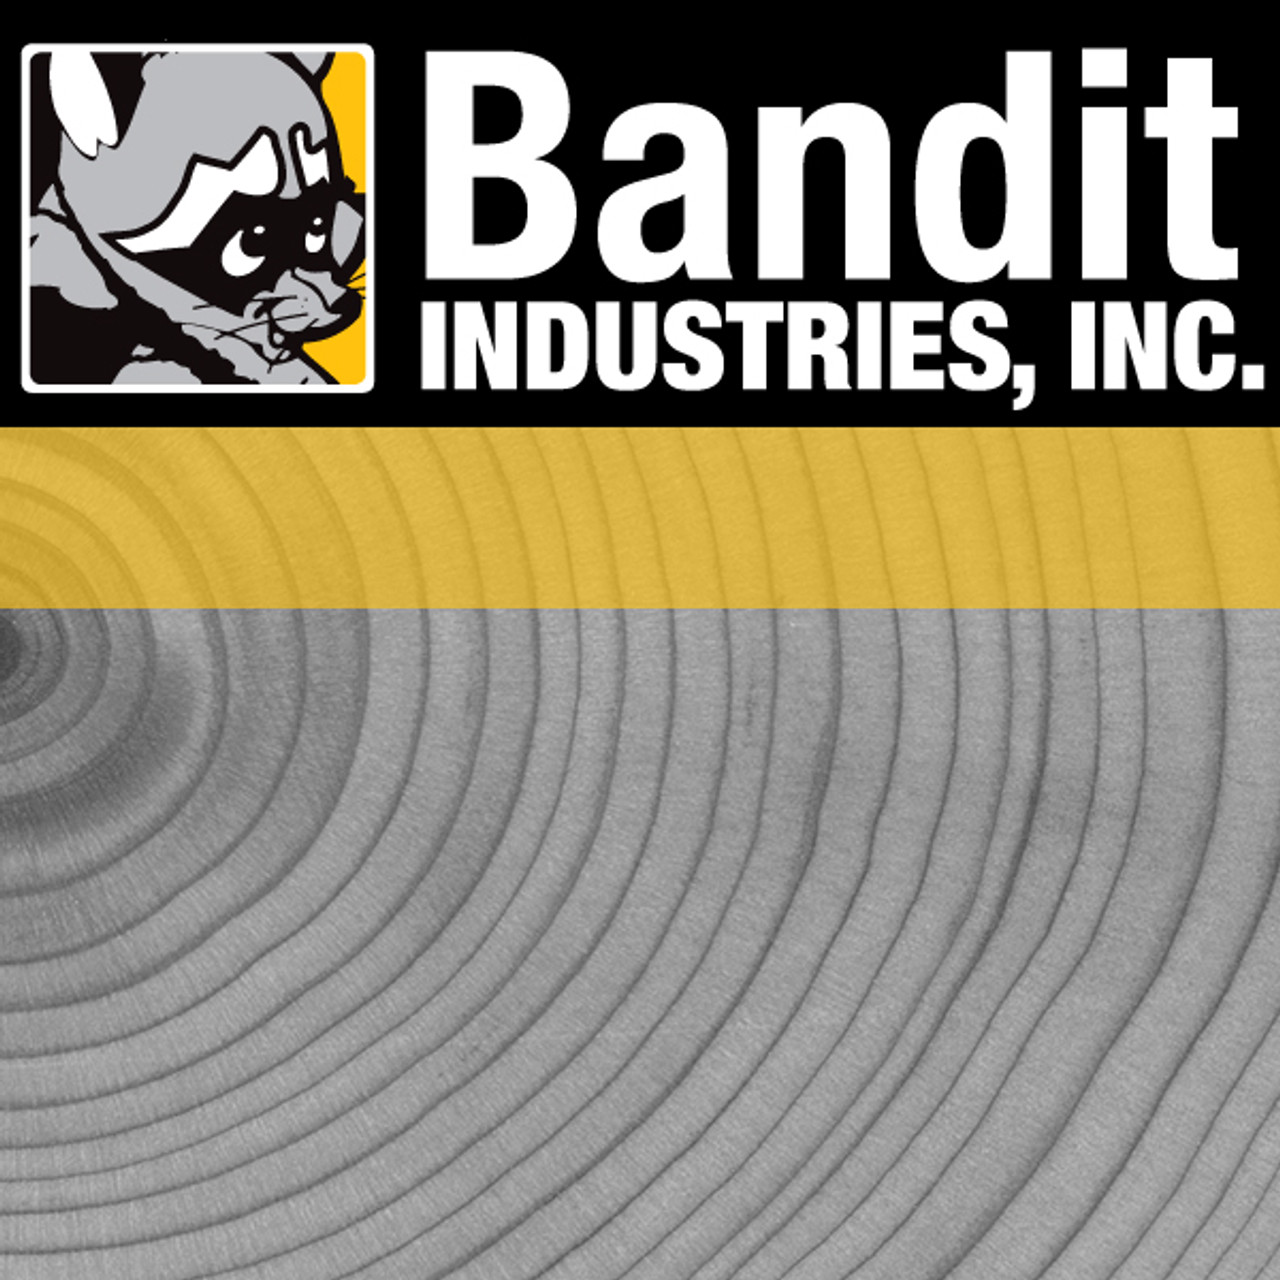 900-1922-38: BANDIT 8VK2500/5 POWER PLUS MAXIBAND KEVLAR BELT